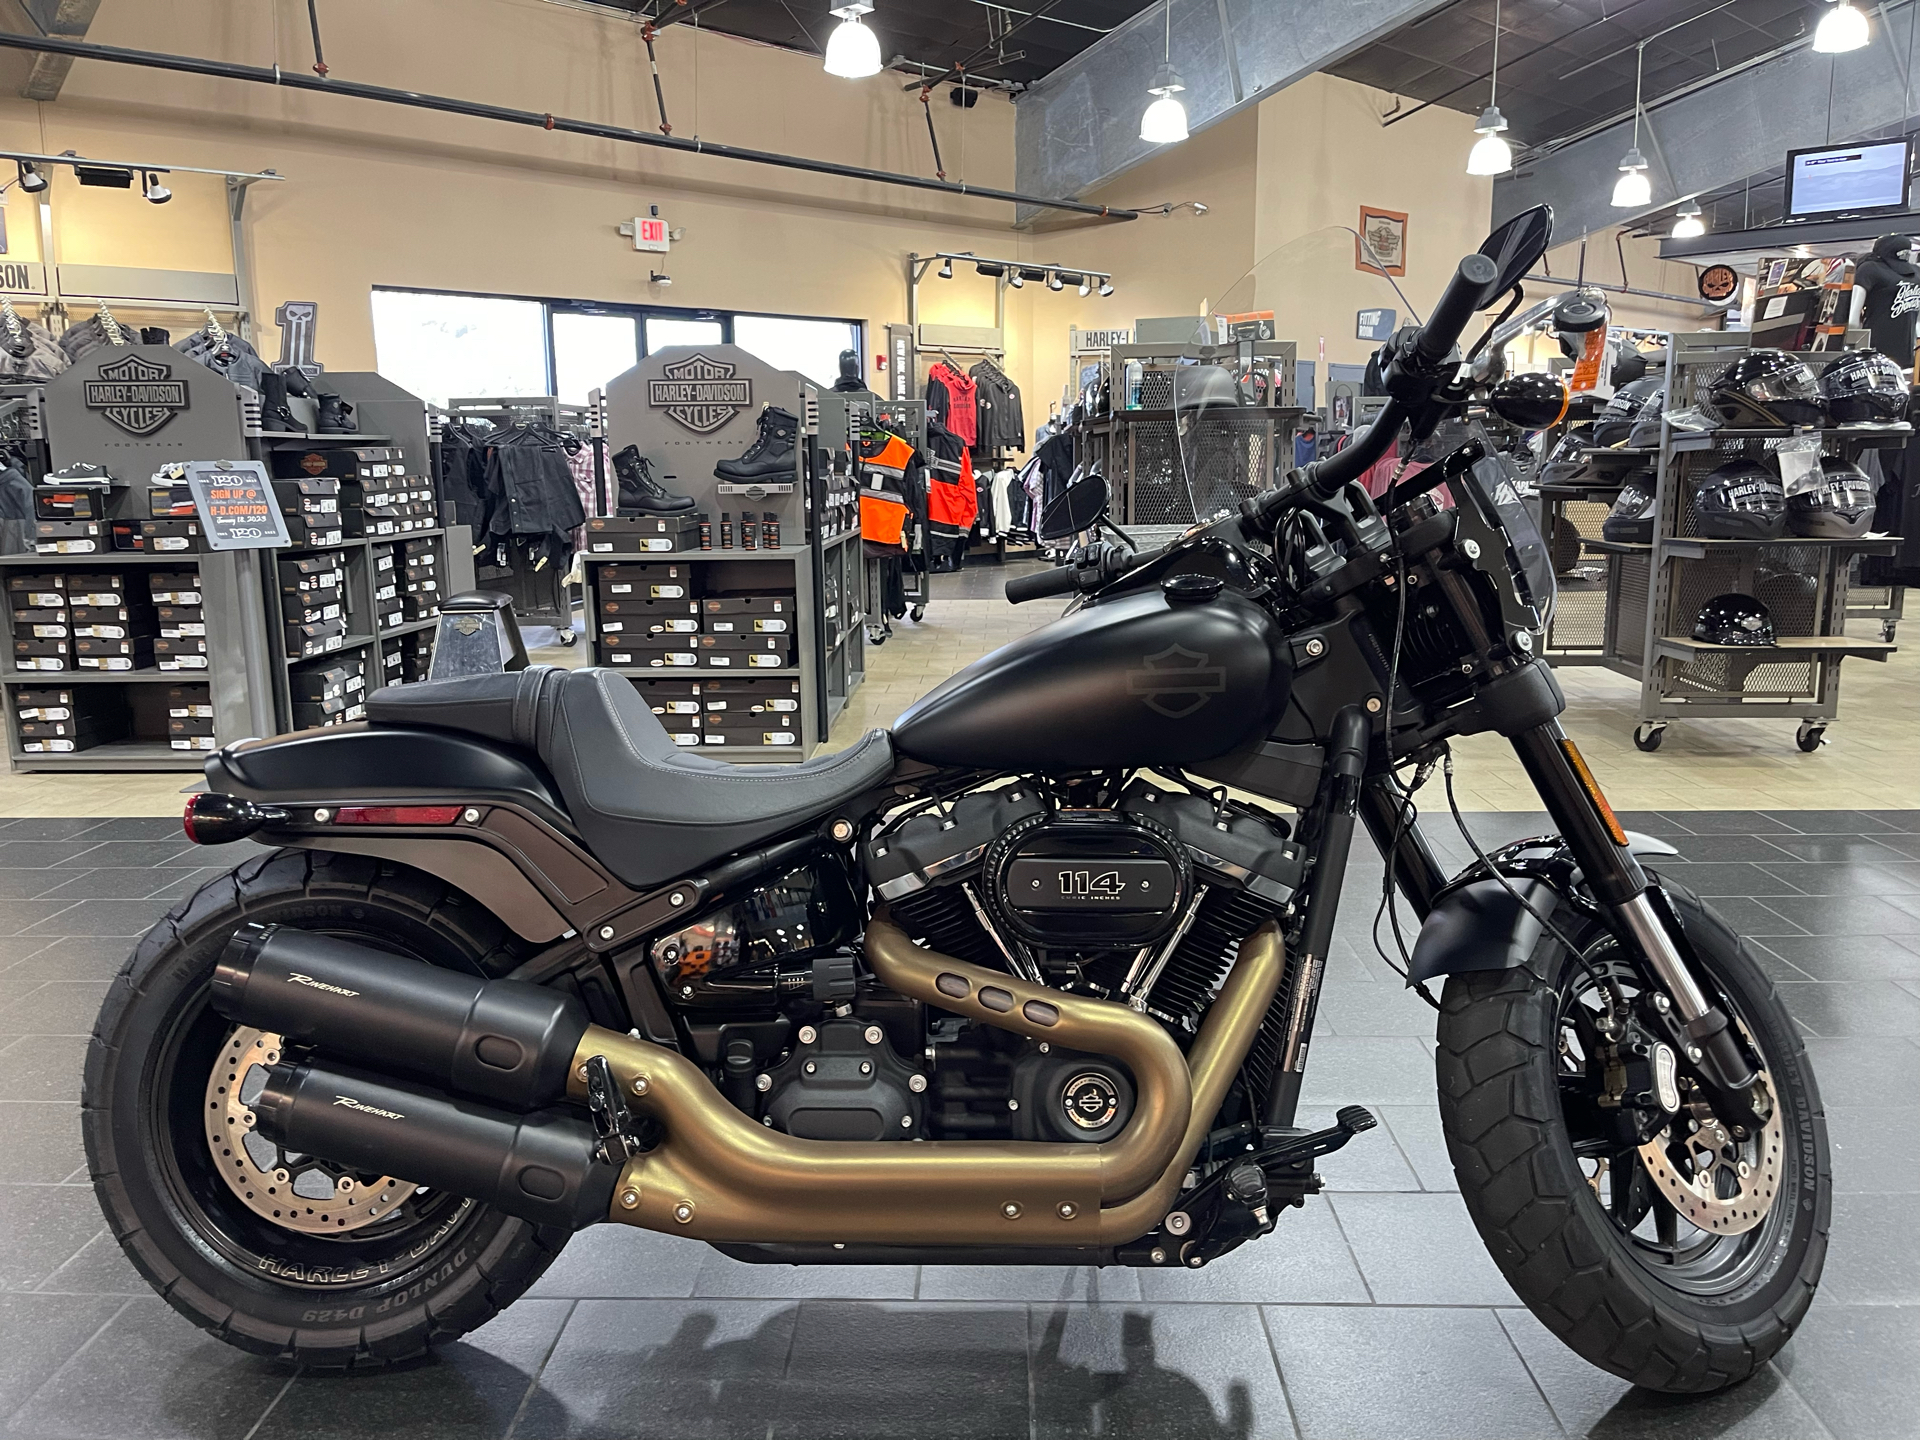 2019 Harley-Davidson Fat Bob® 114 in The Woodlands, Texas - Photo 1